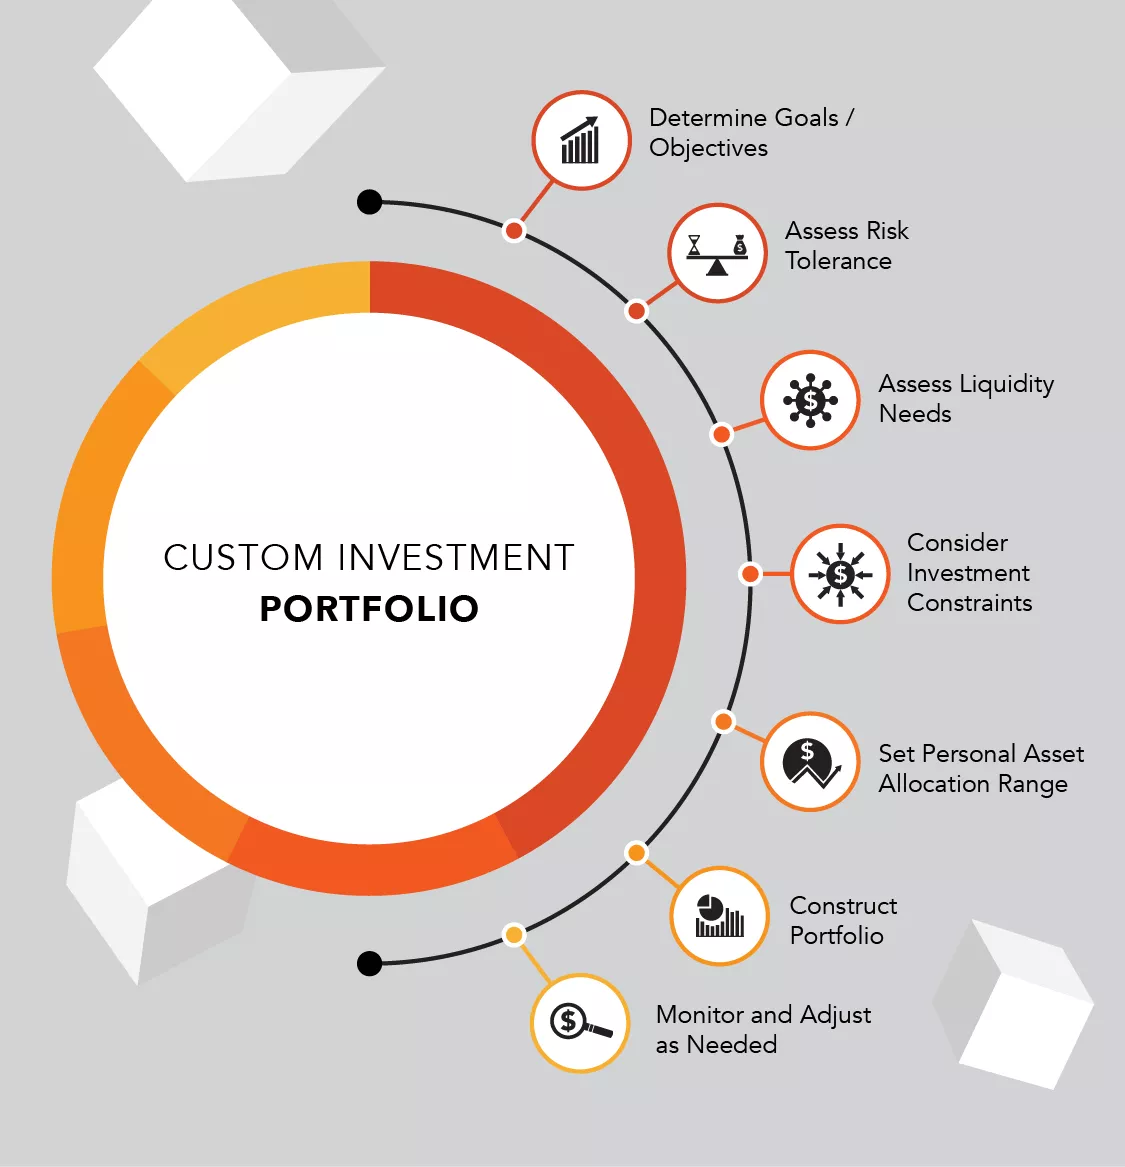 customer investment portfolio image